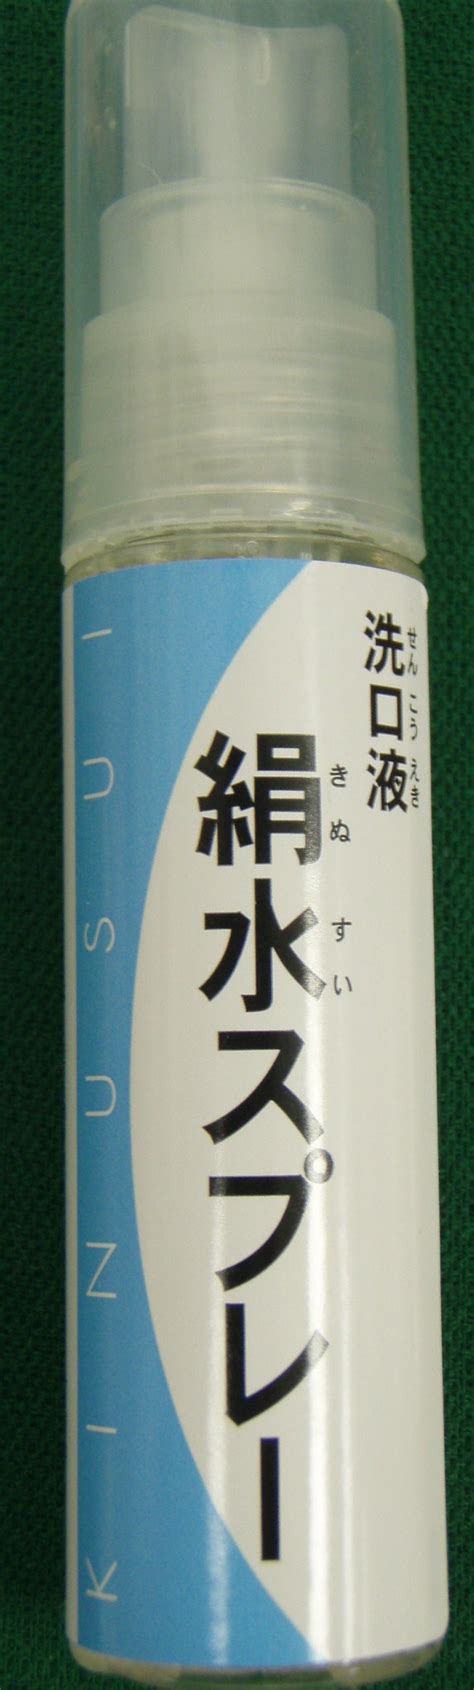 Teraura - Hi-Lex Corp. 1-12-28 Sakaemachi. 665-0845, Takarazuka. +. http://www.hi-lex.co.jp. Hi-Lex Corporation: Company profile, business summary, shareholders, …